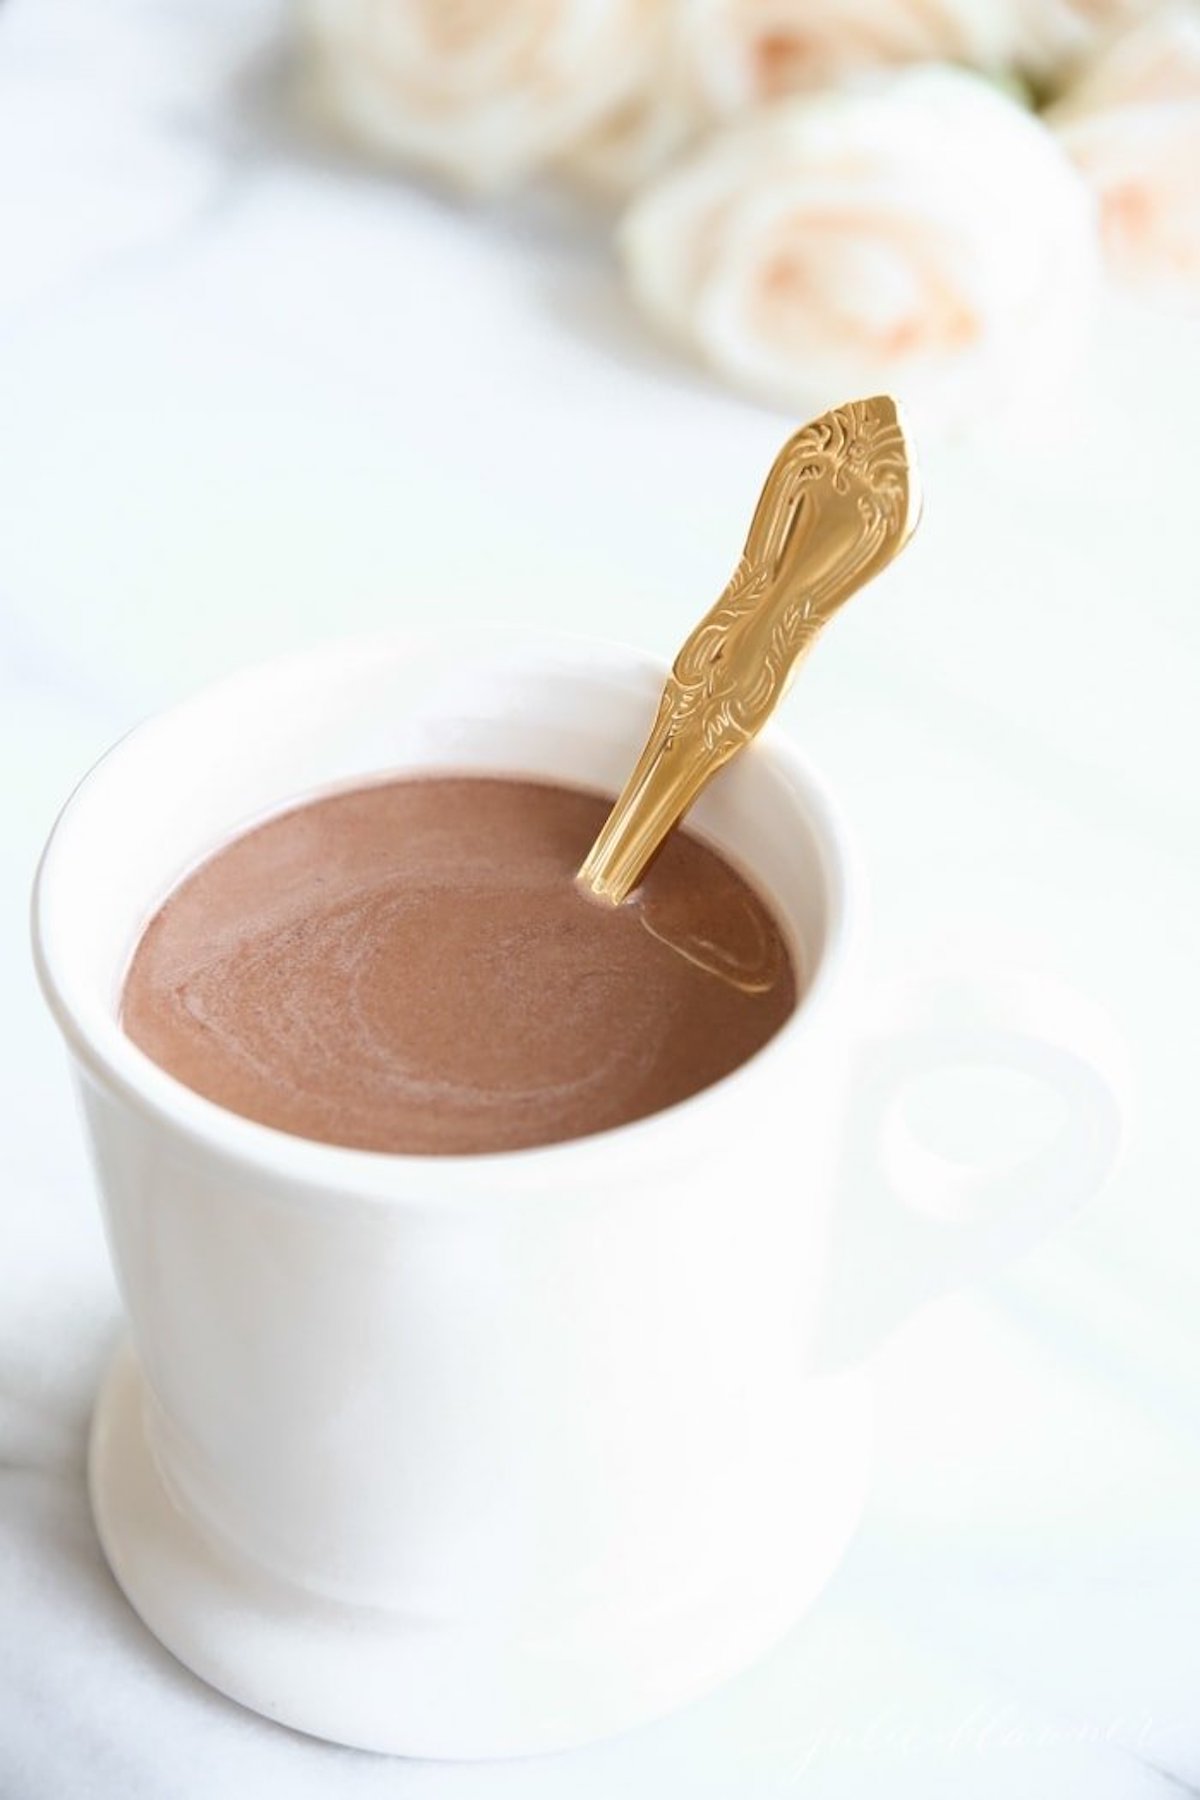 A white mug full of homemade hot chocolate